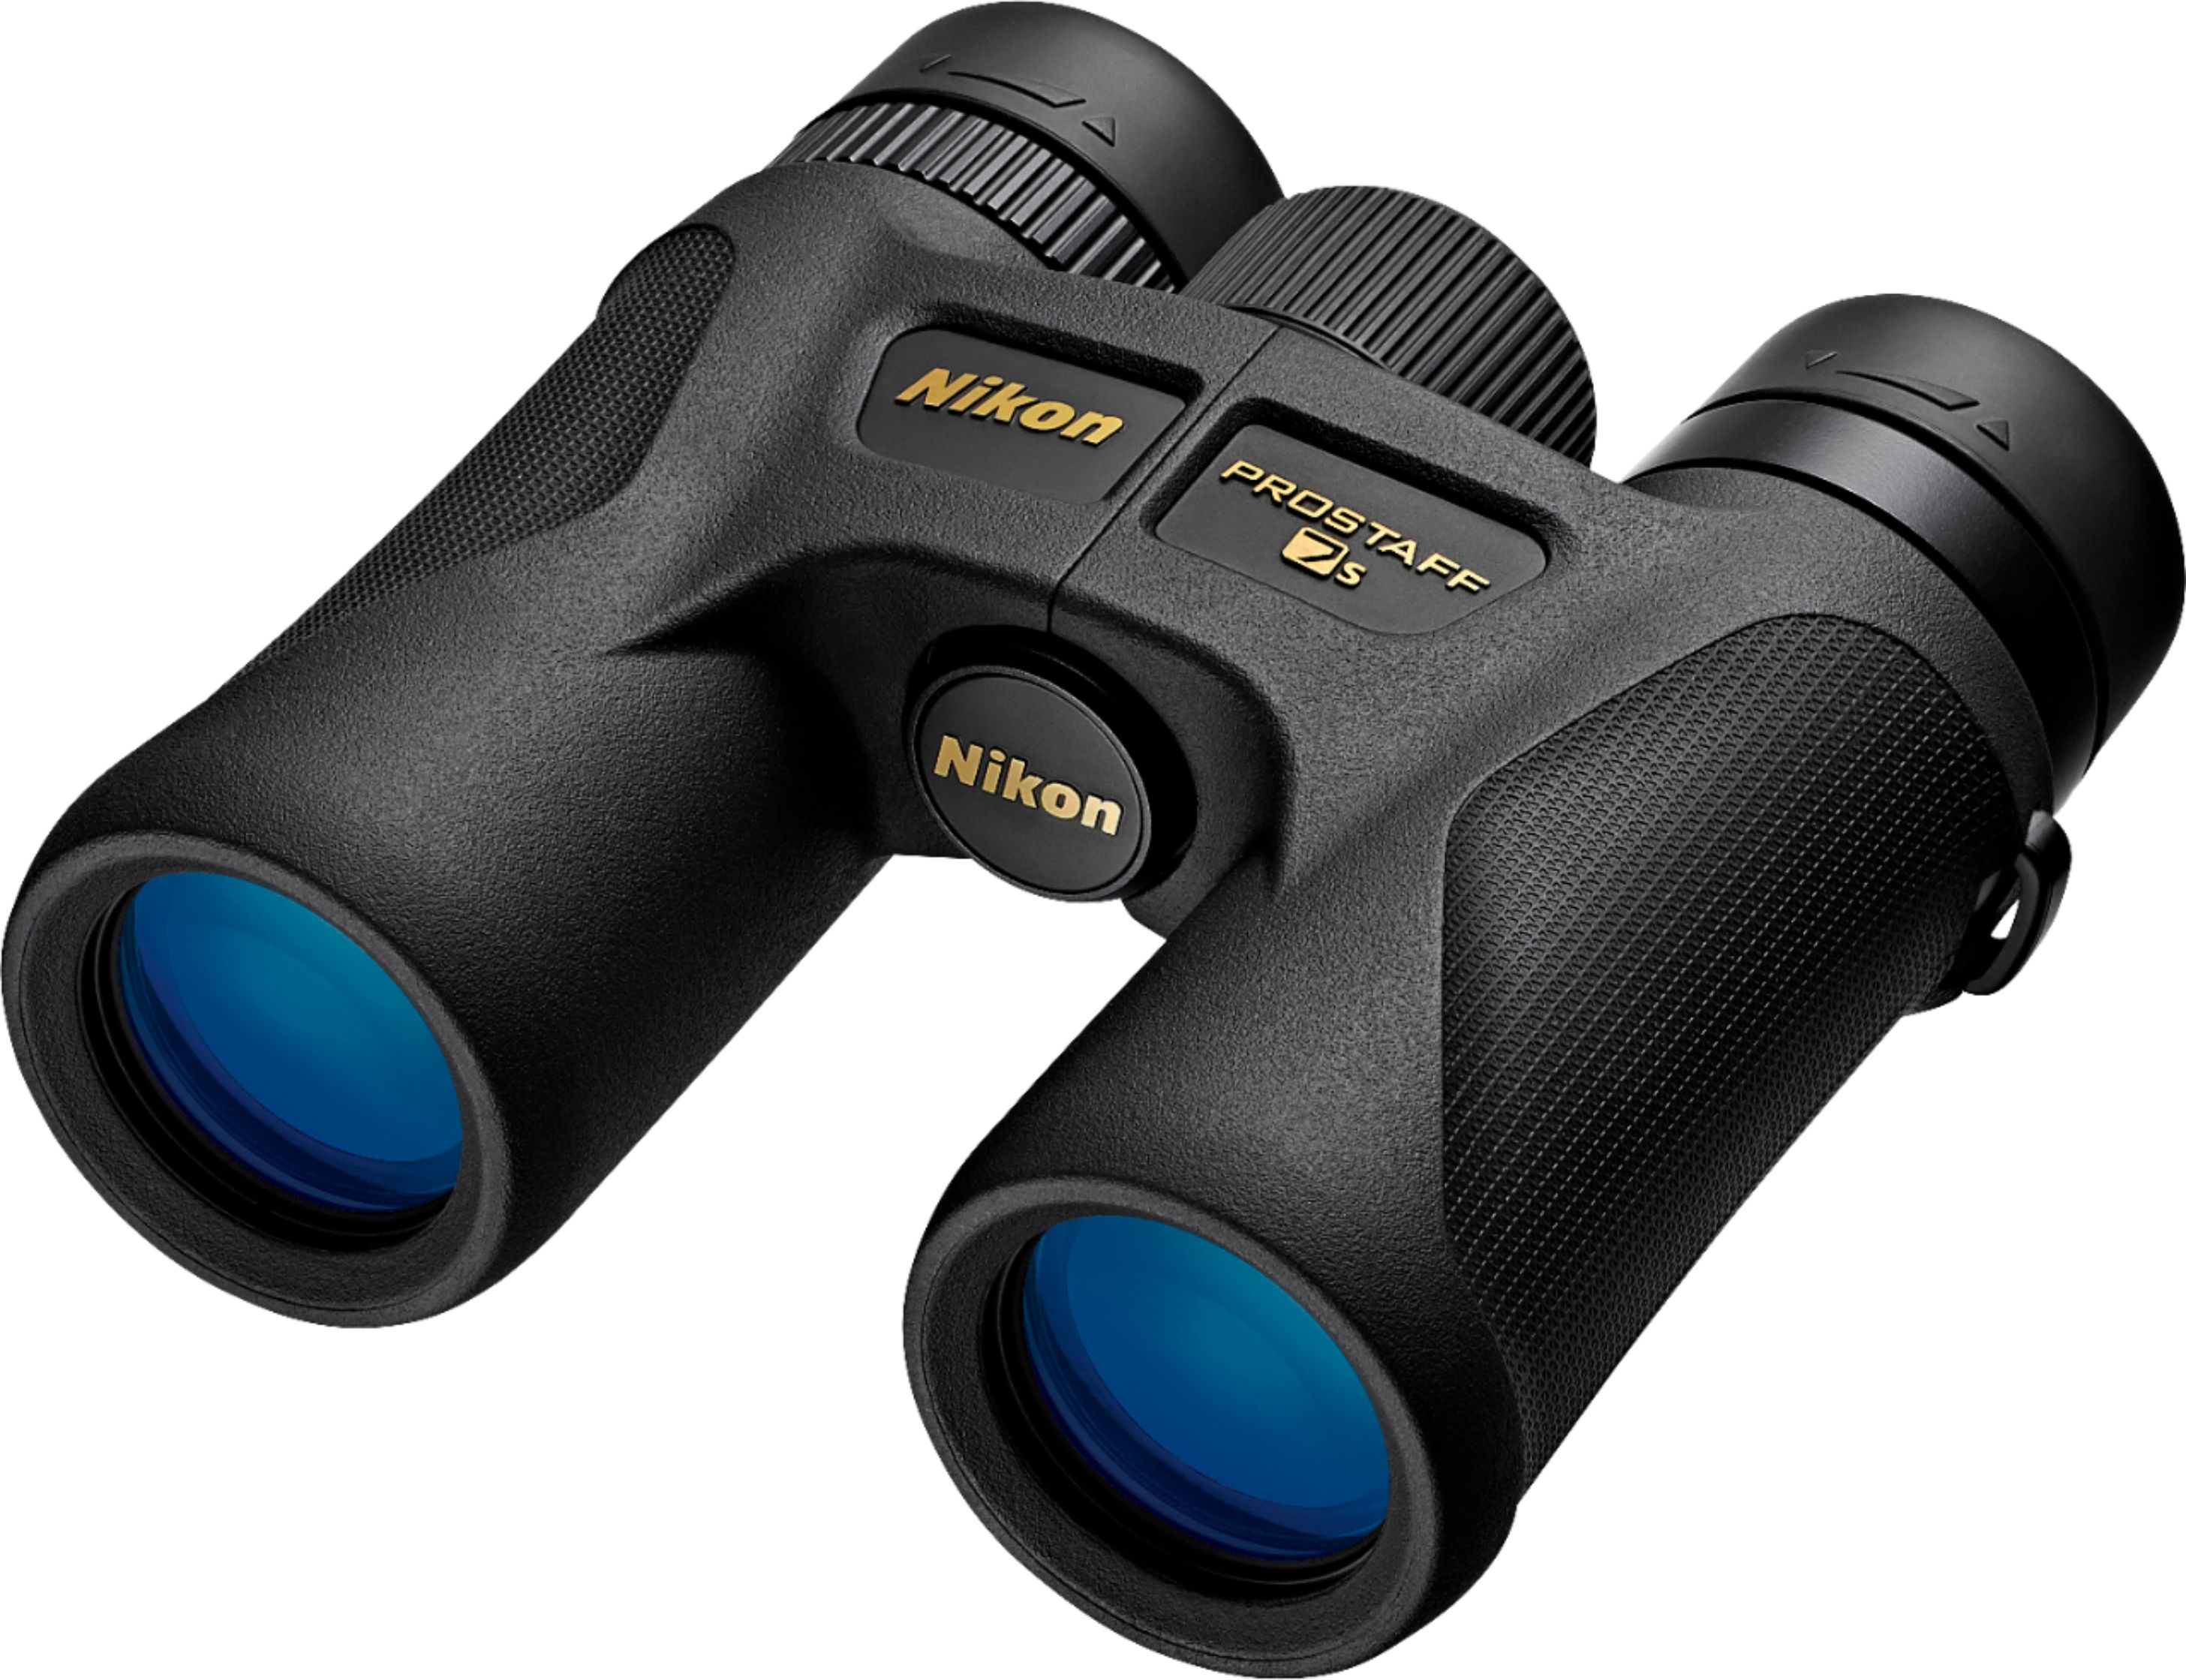 Angle View: Nikon - ProStaff 8 x 30 Binoculars - Black